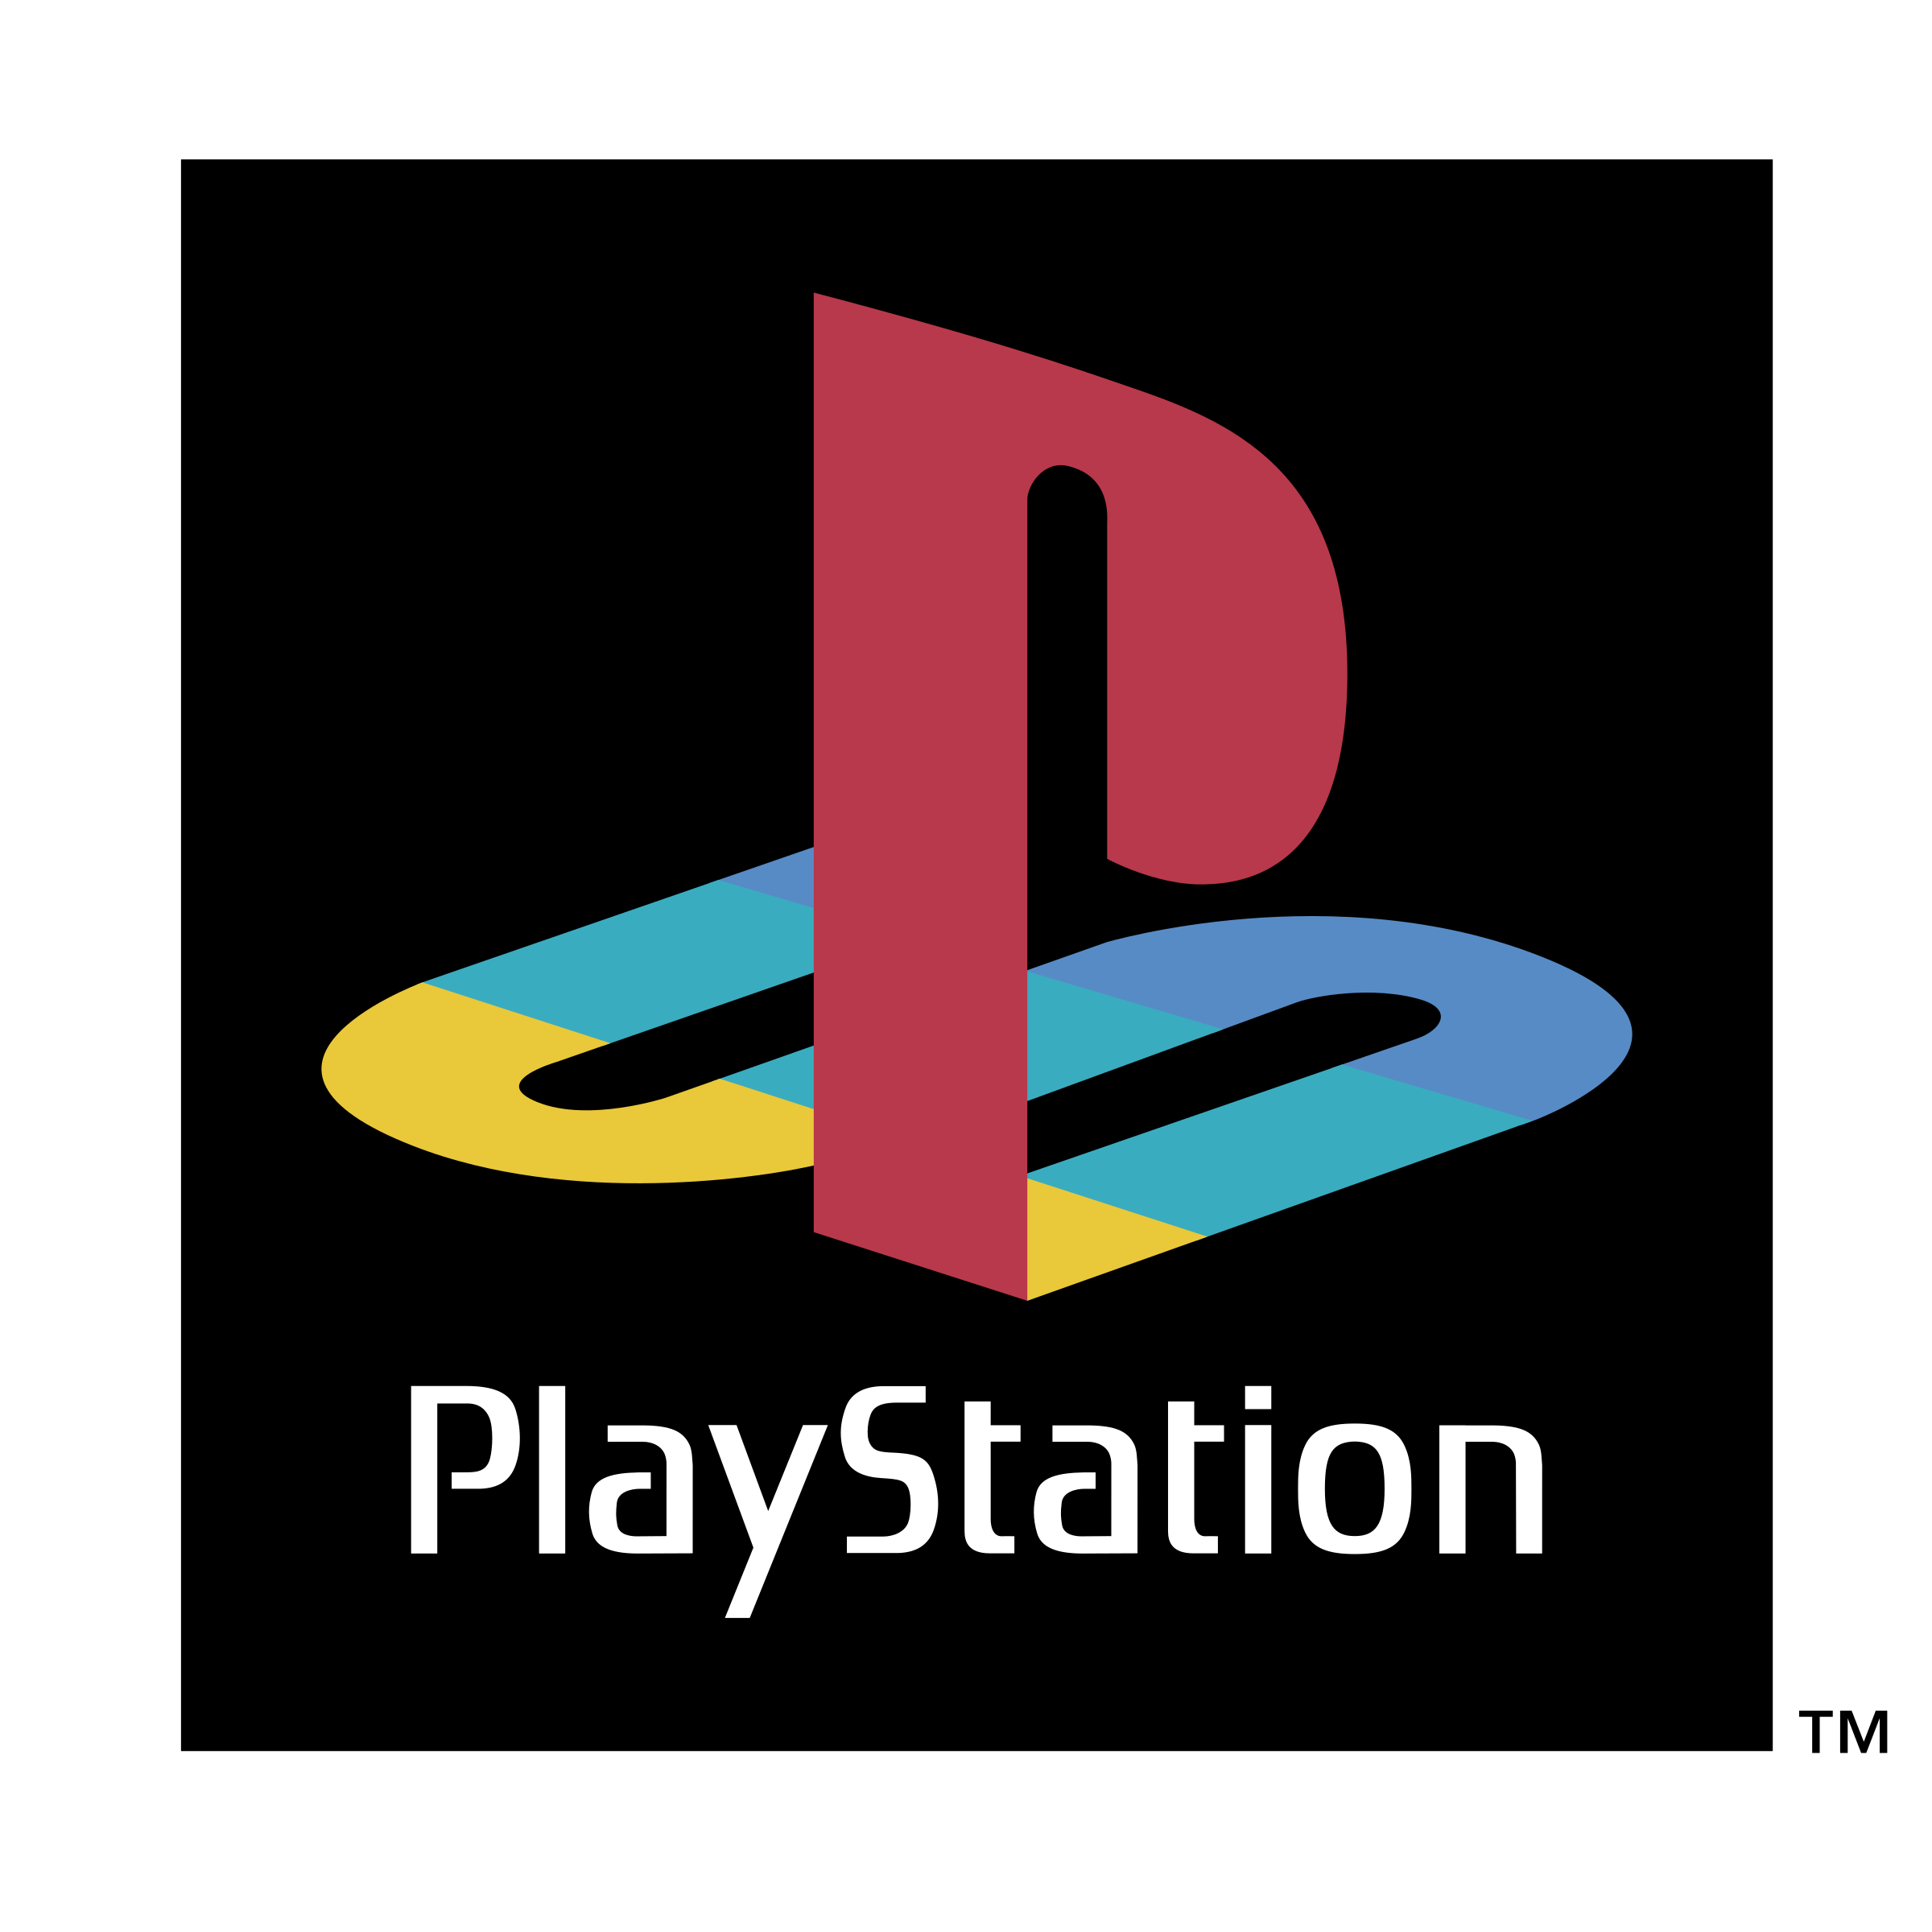 Playstatino Logo - PlayStation Logo PNG Transparent & SVG Vector - Freebie Supply